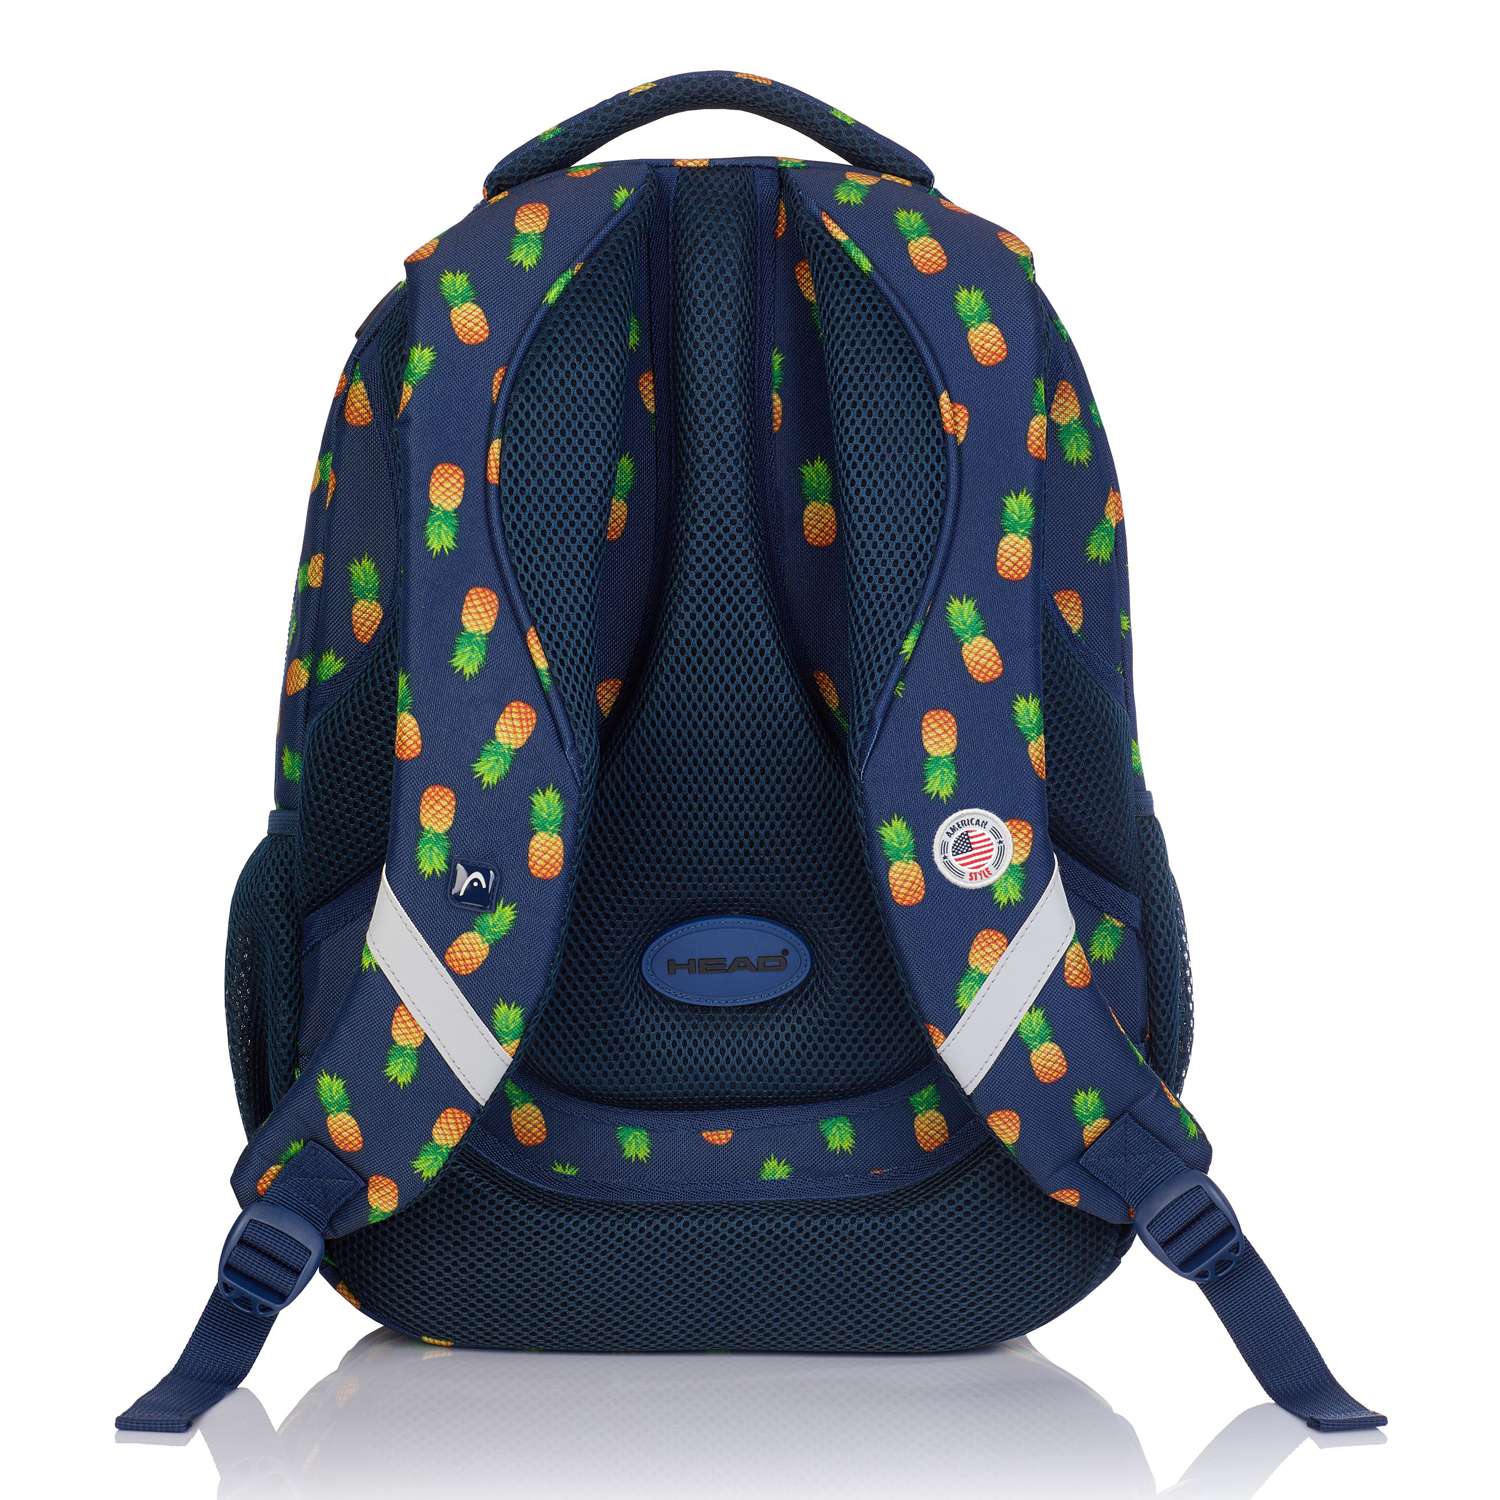 Рюкзак HEAD HD-252 цвет синий/зеленый/оранжевый - фото 2